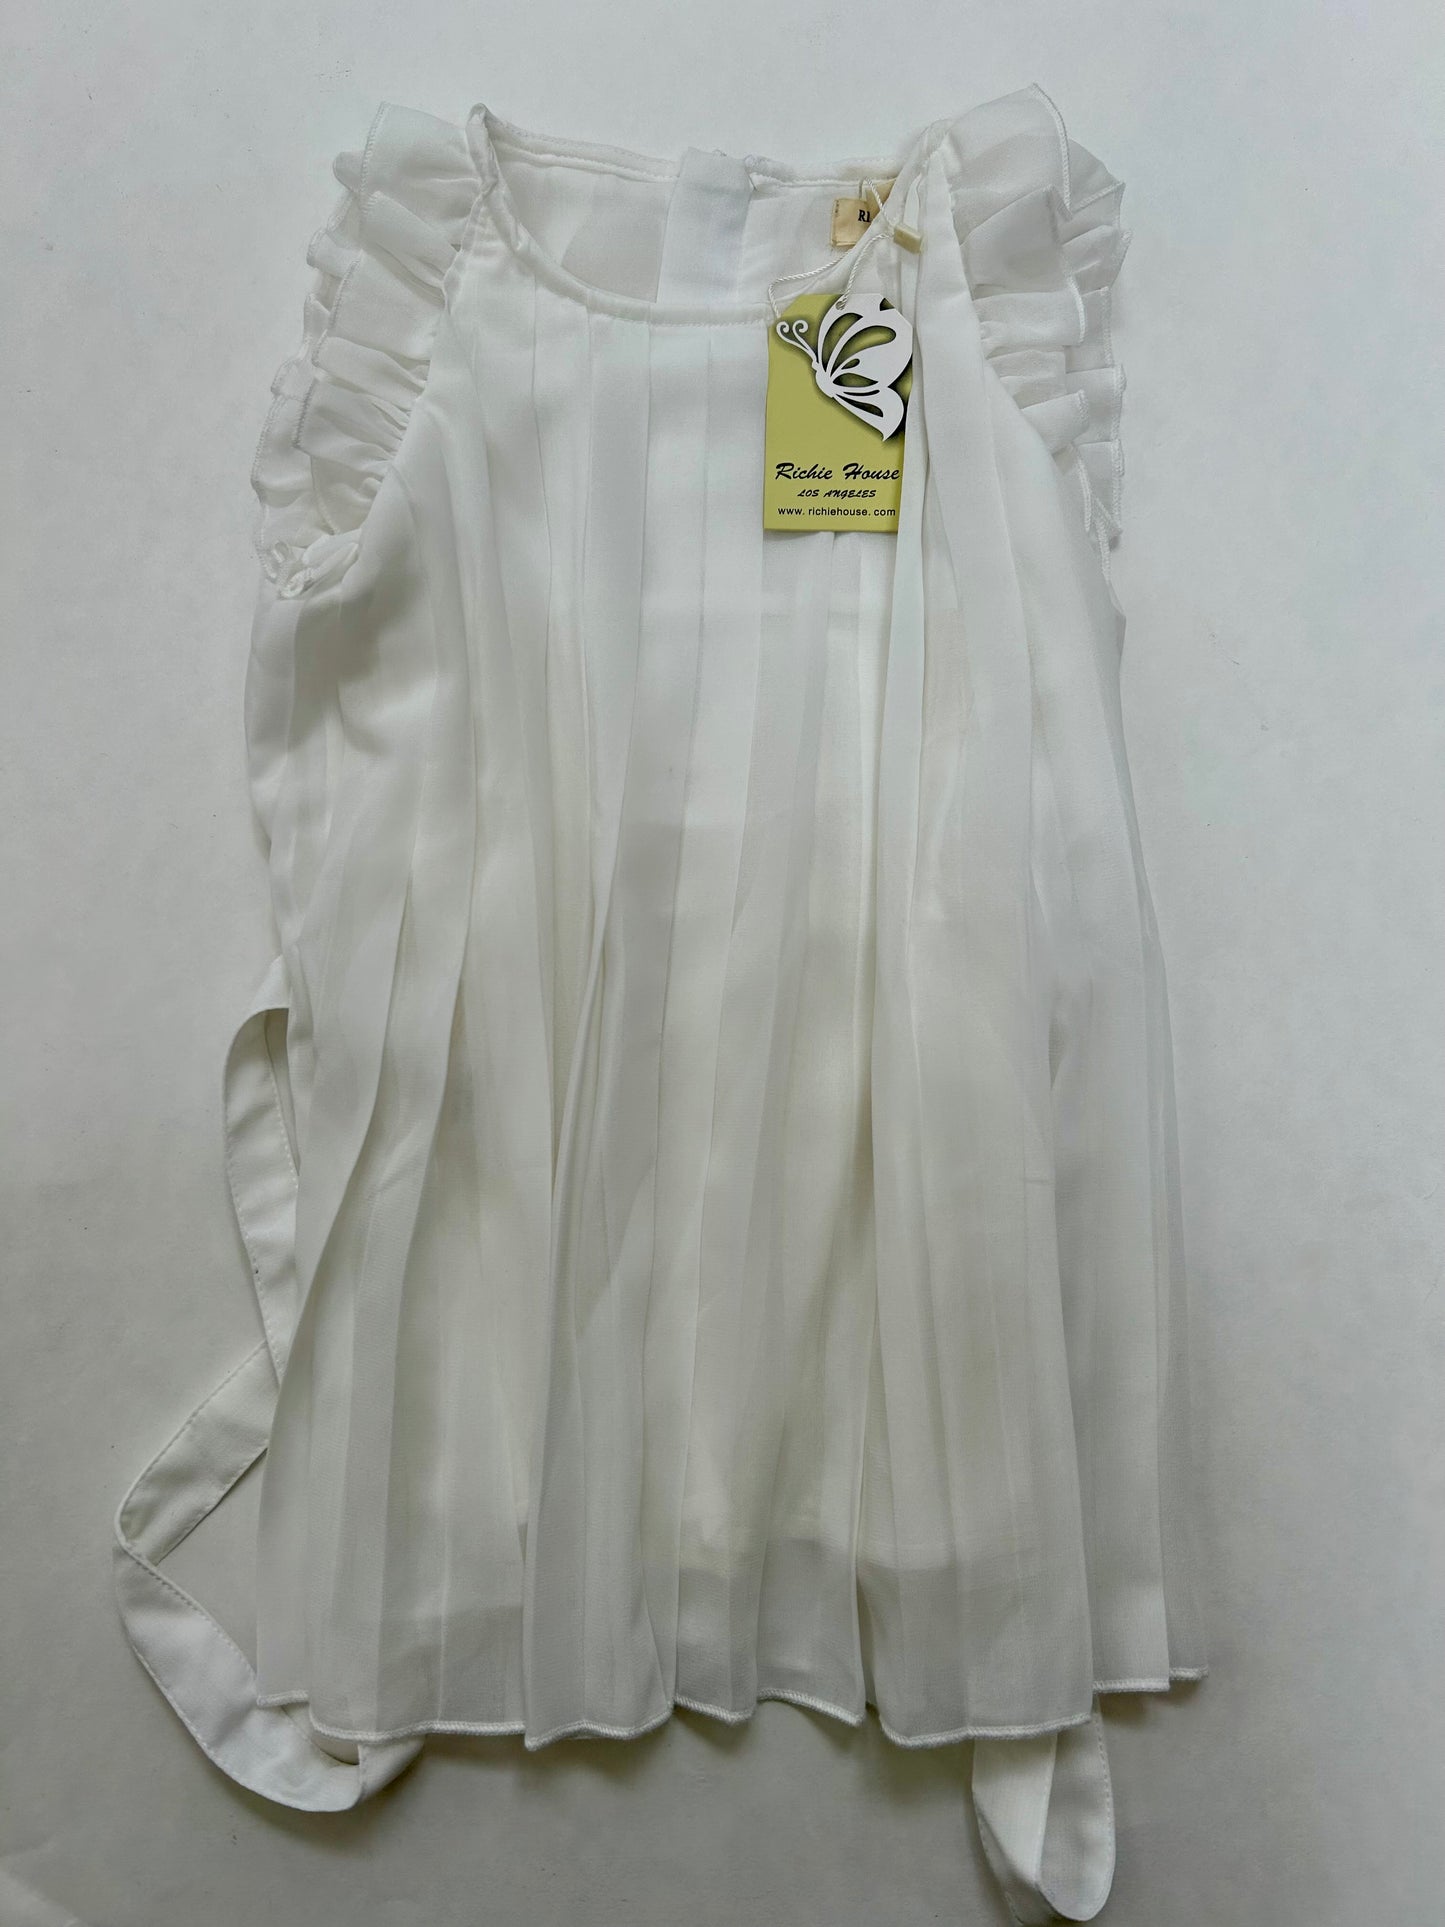 Girls 3T-4T Richie House white formal dress